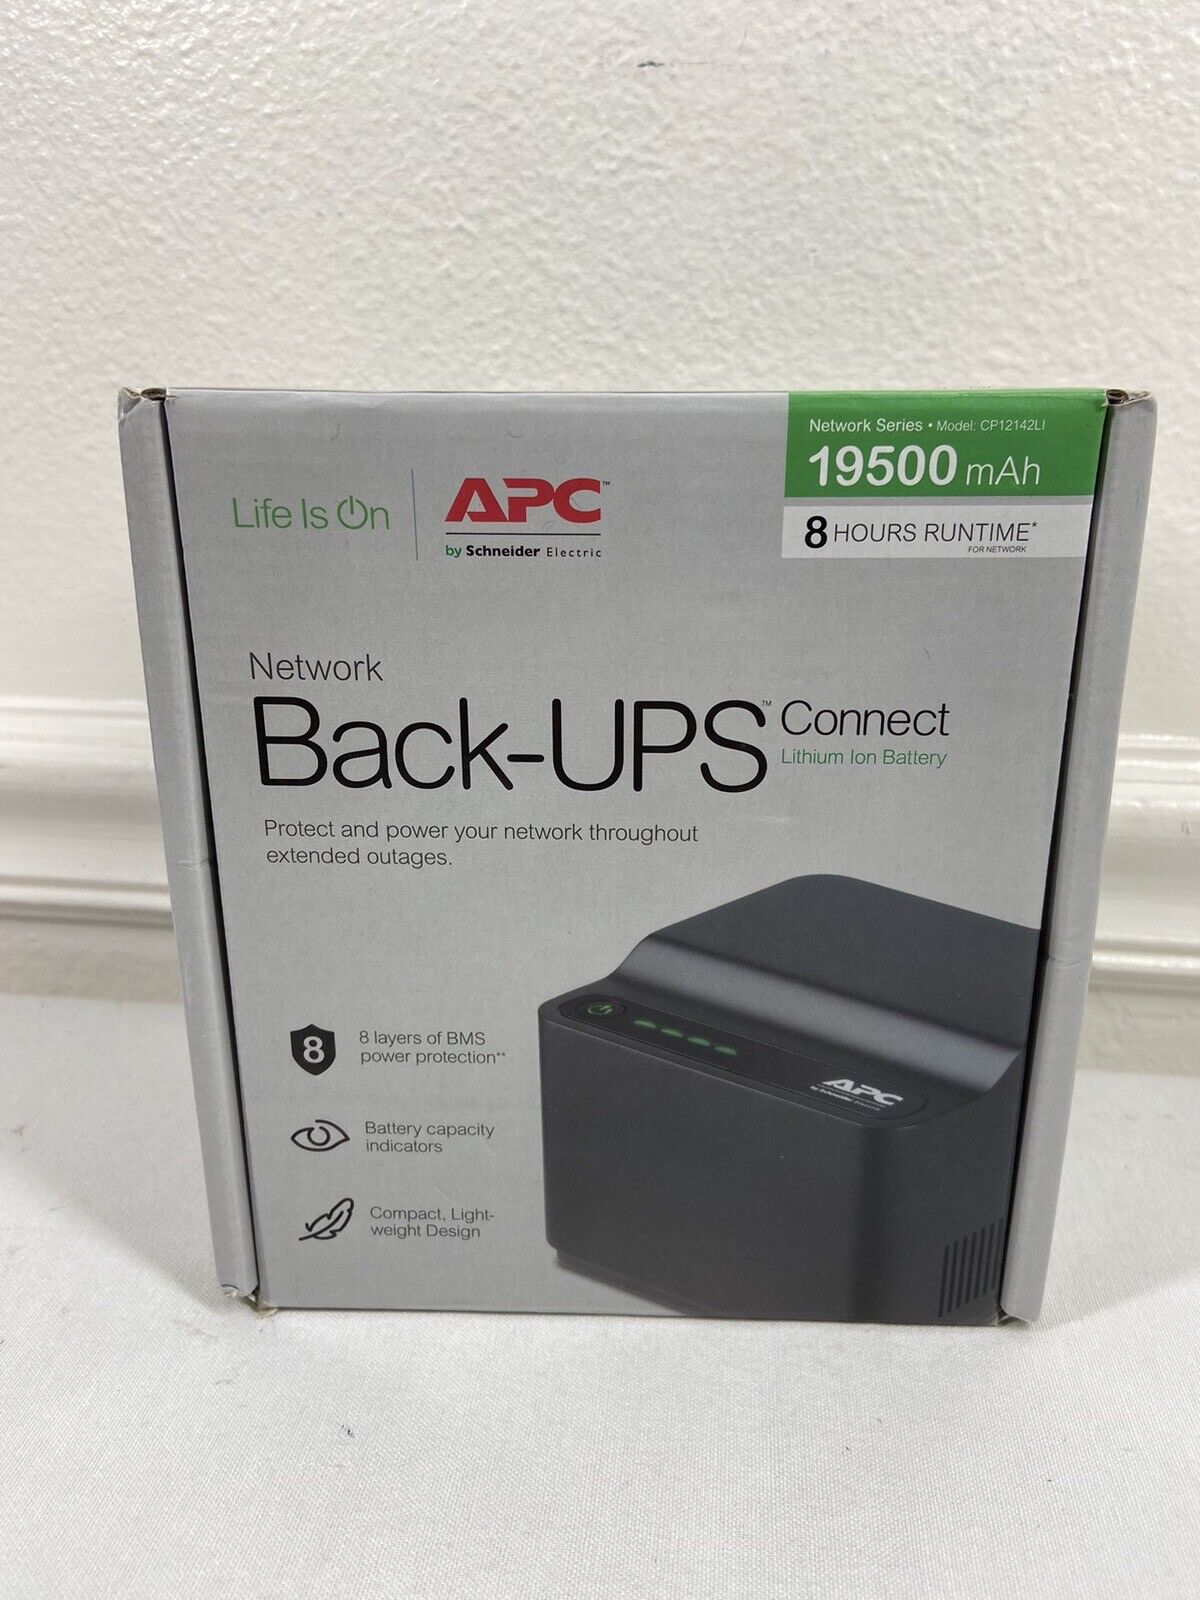 APC CP12142Li Network Back-UPS Connect 19500mAh Tested Works